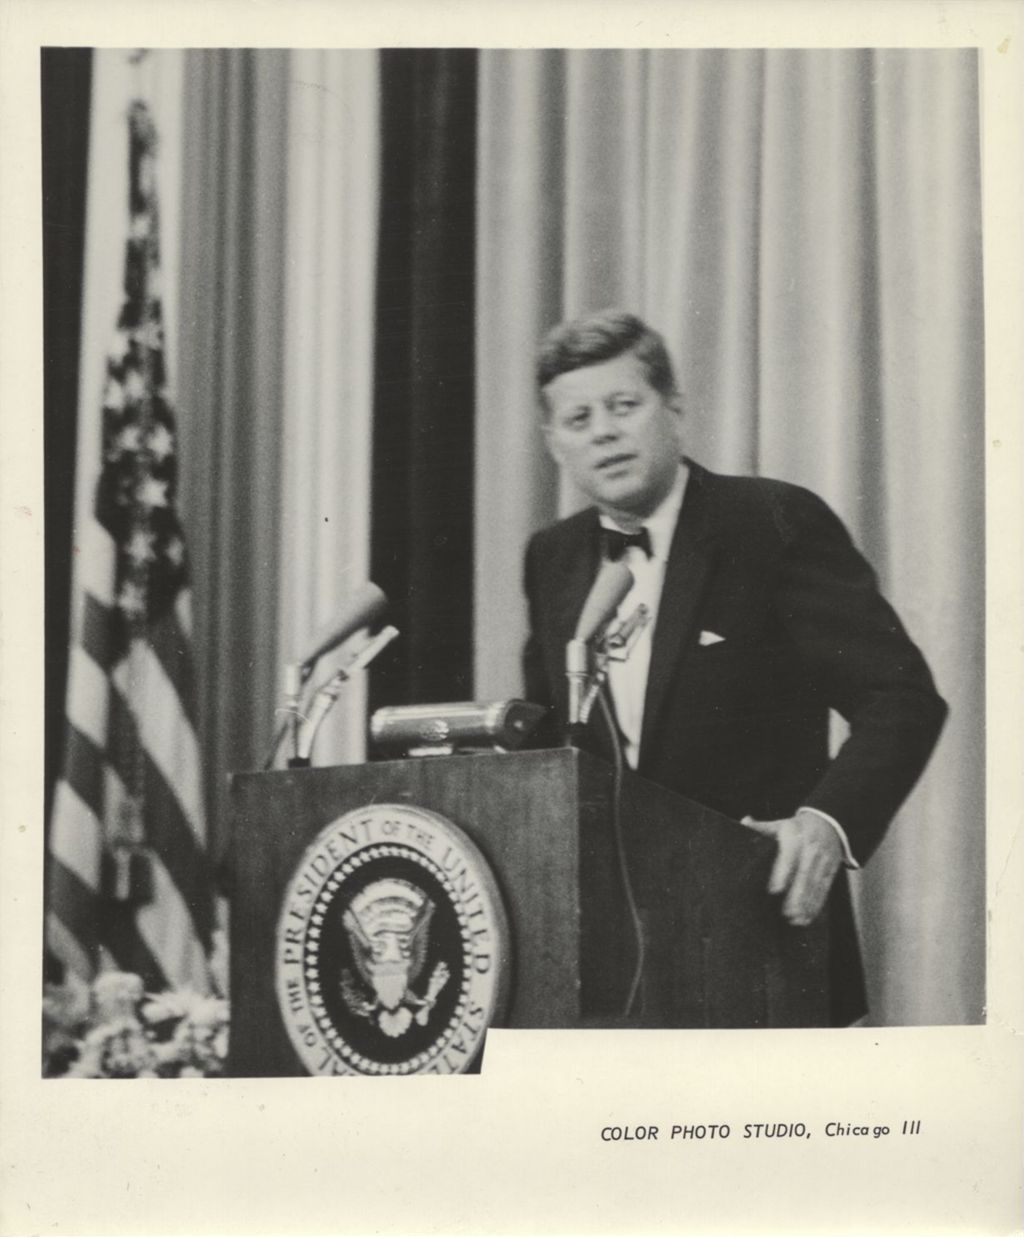 Miniature of John F. Kennedy at a podium